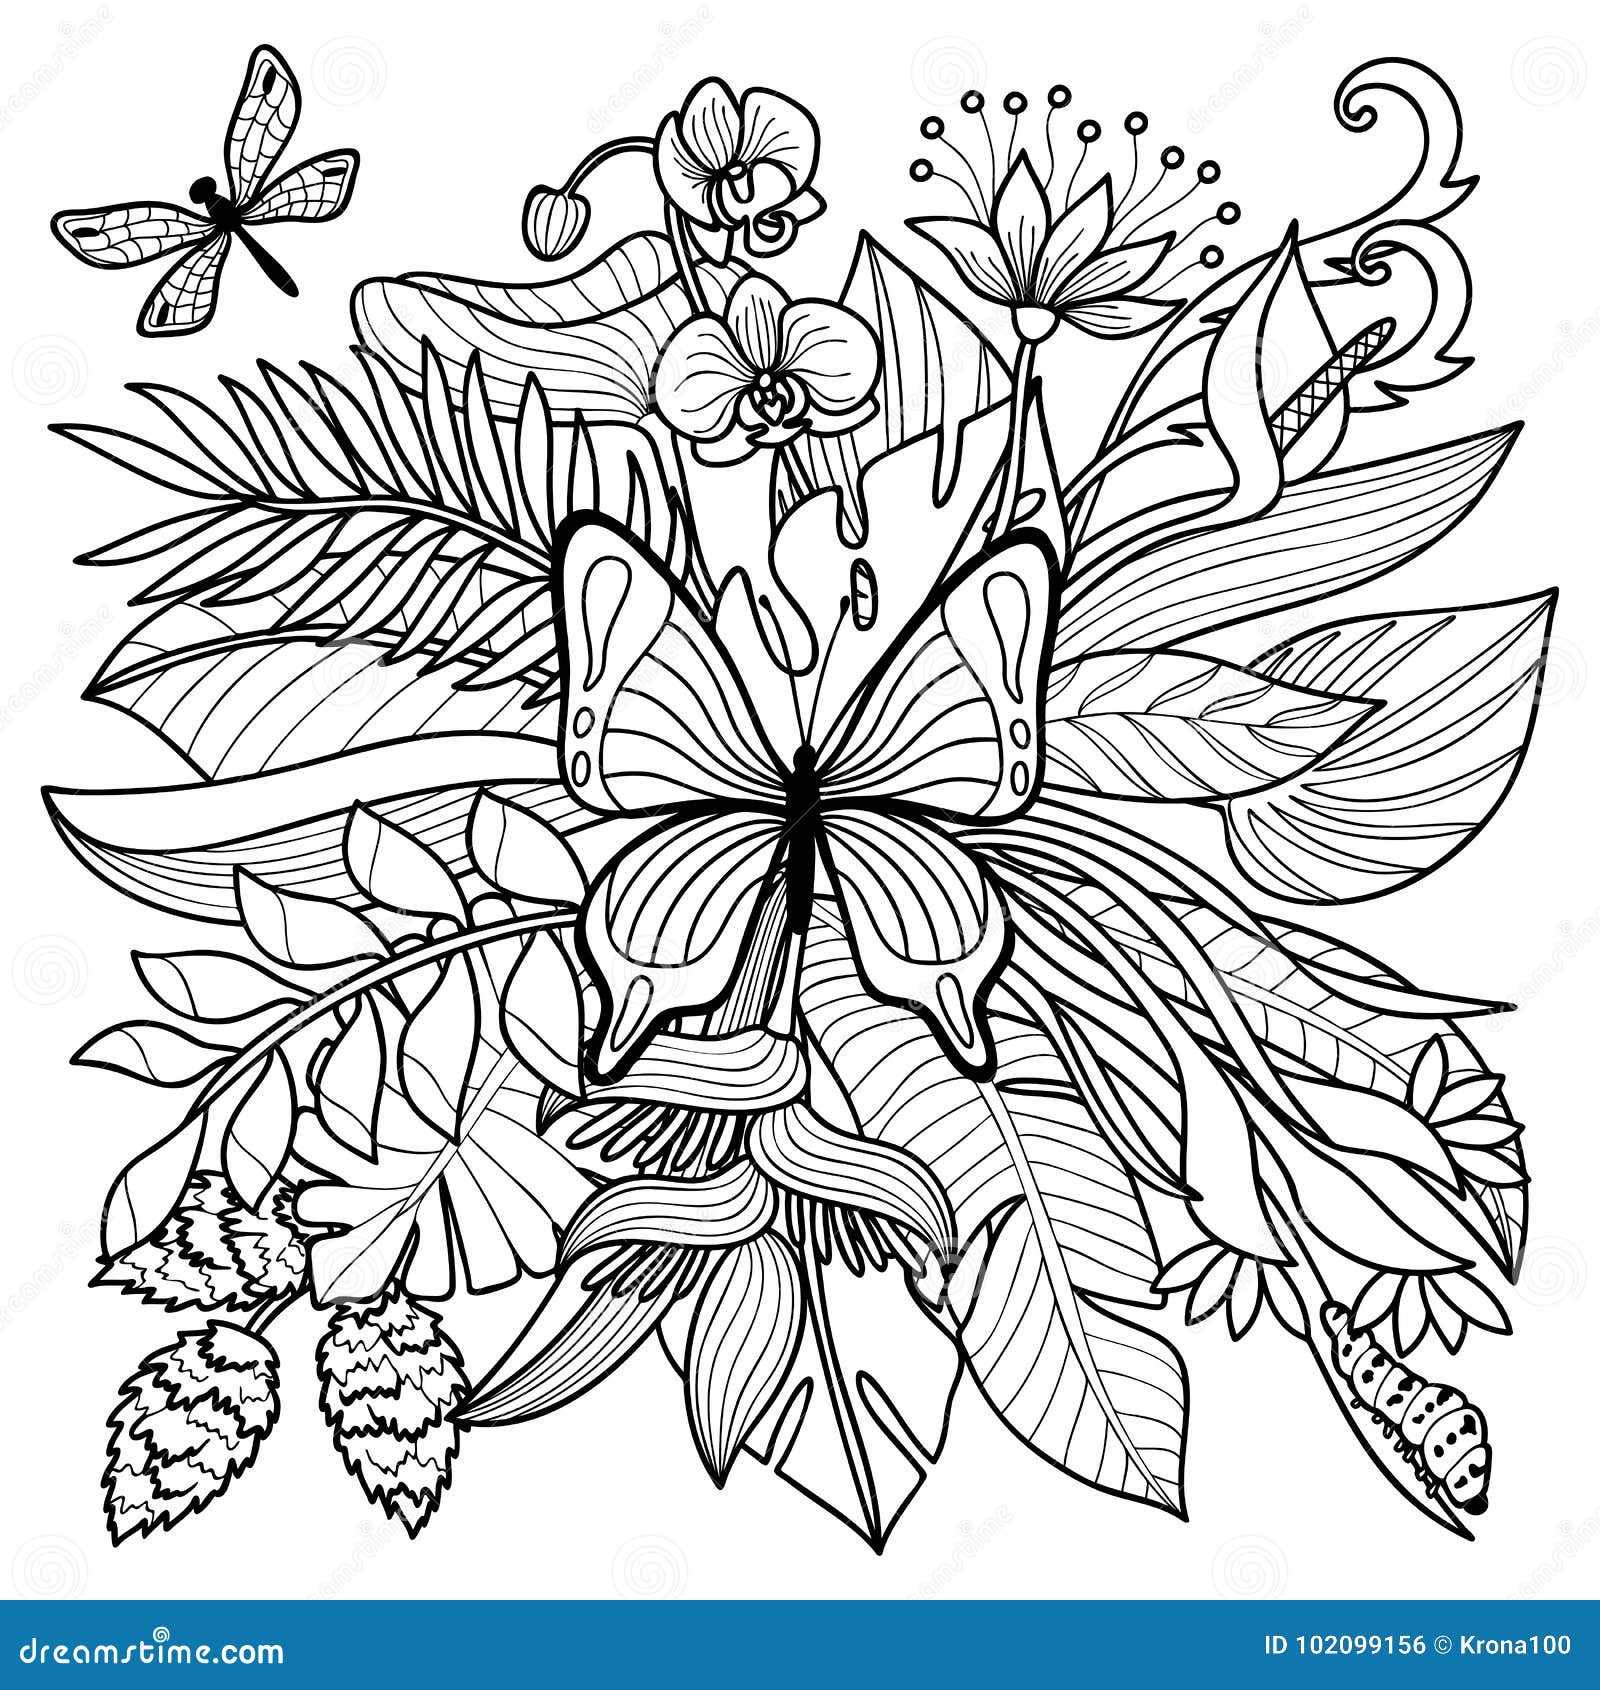 Tropical rainforest coloring page stock illustrations â tropical rainforest coloring page stock illustrations vectors clipart